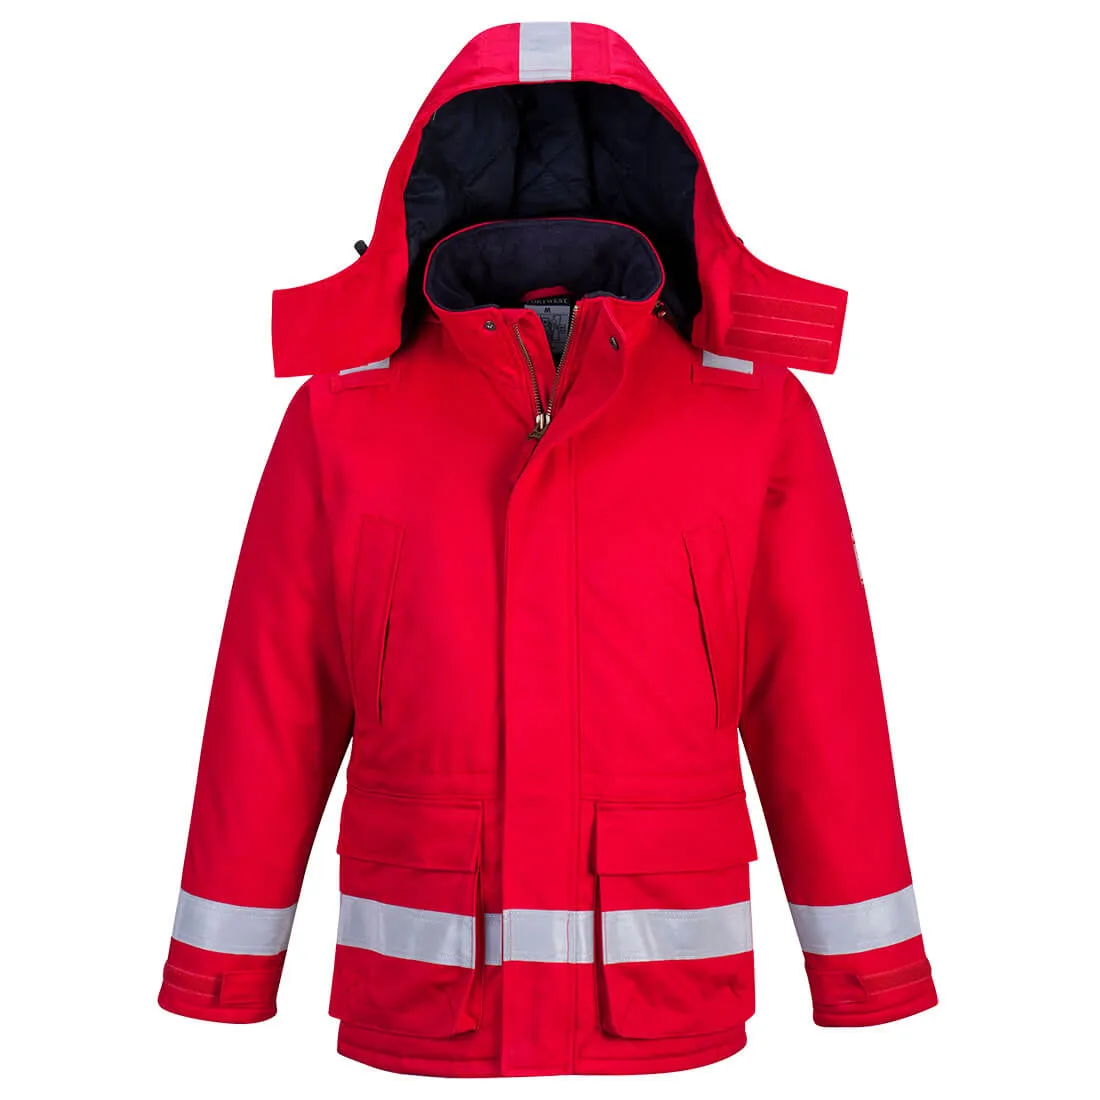 Biz Flame Mens Flame Resistant Antistatic Winter Jacket - Red, S